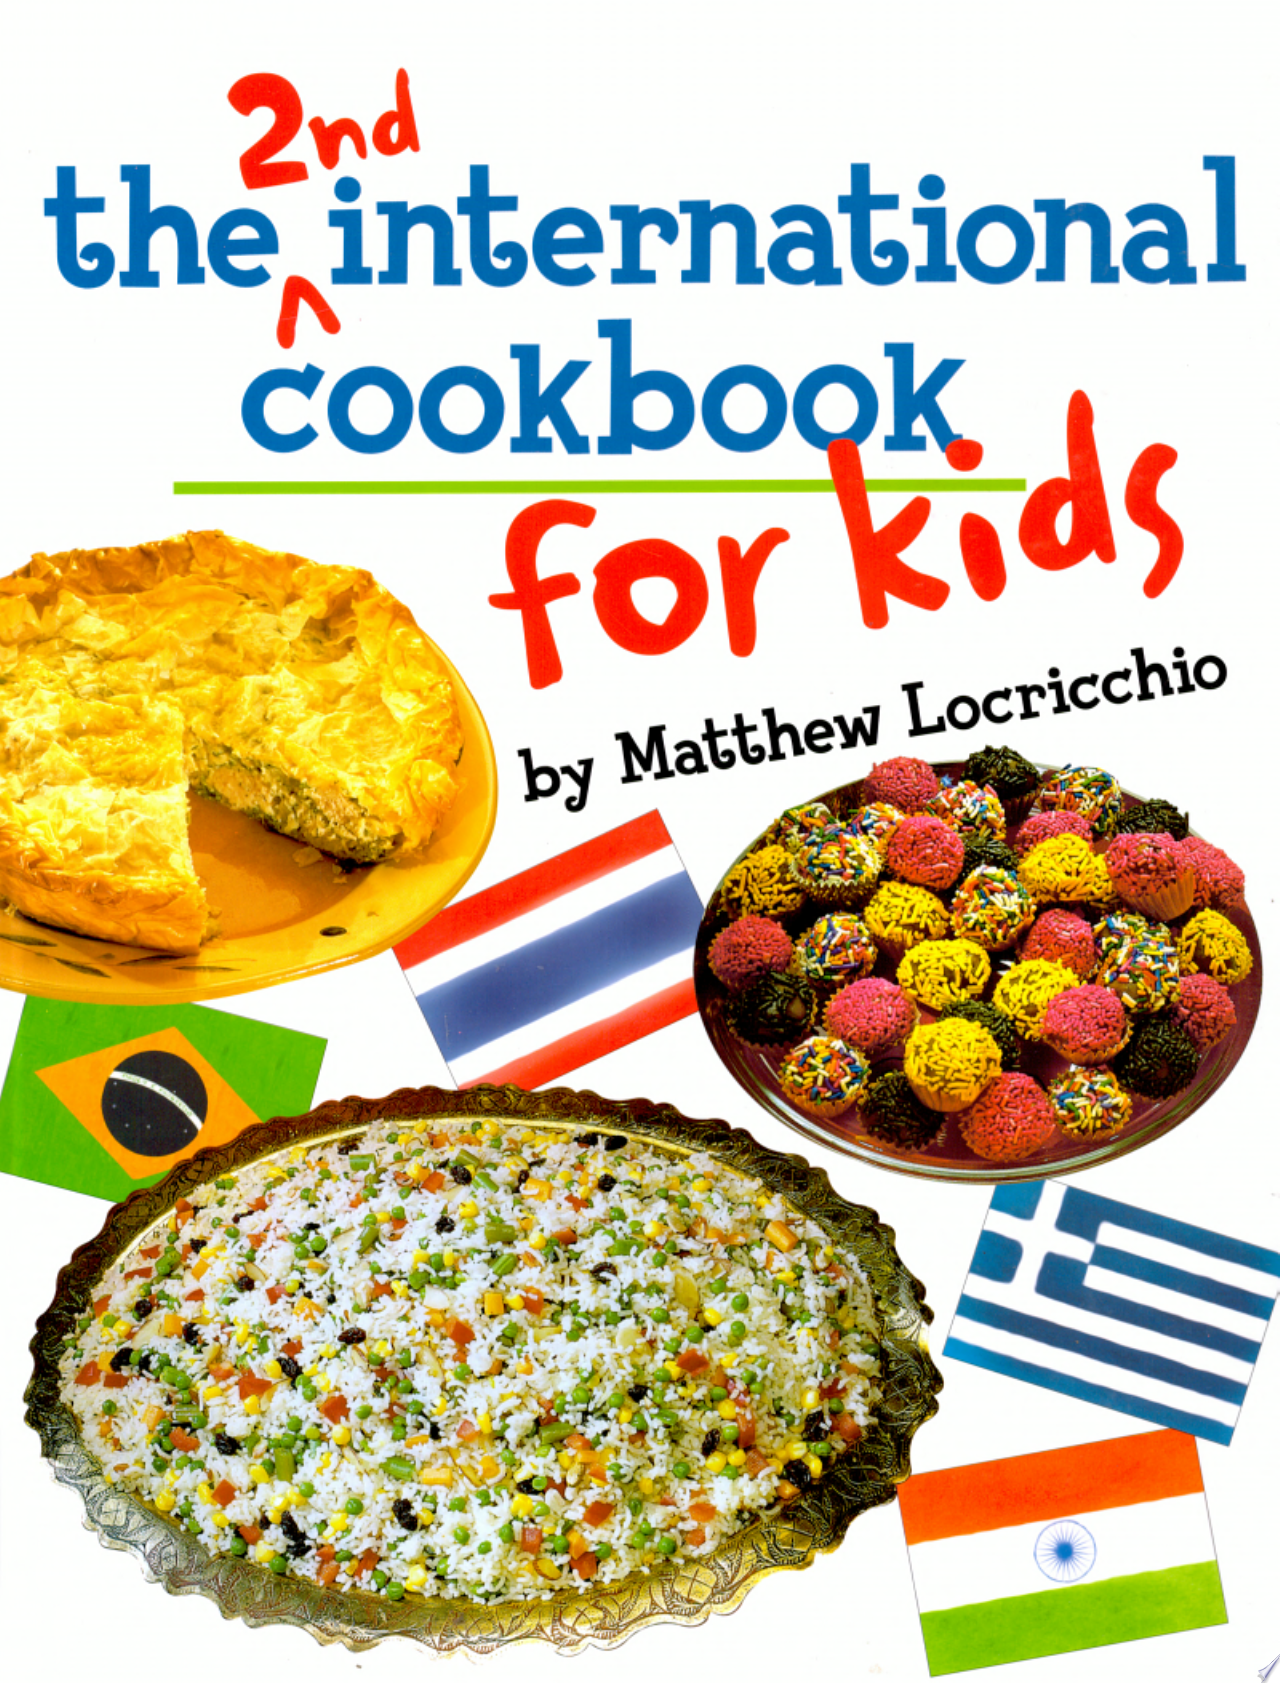 Image for "The 2nd International Cookbook for Kids"